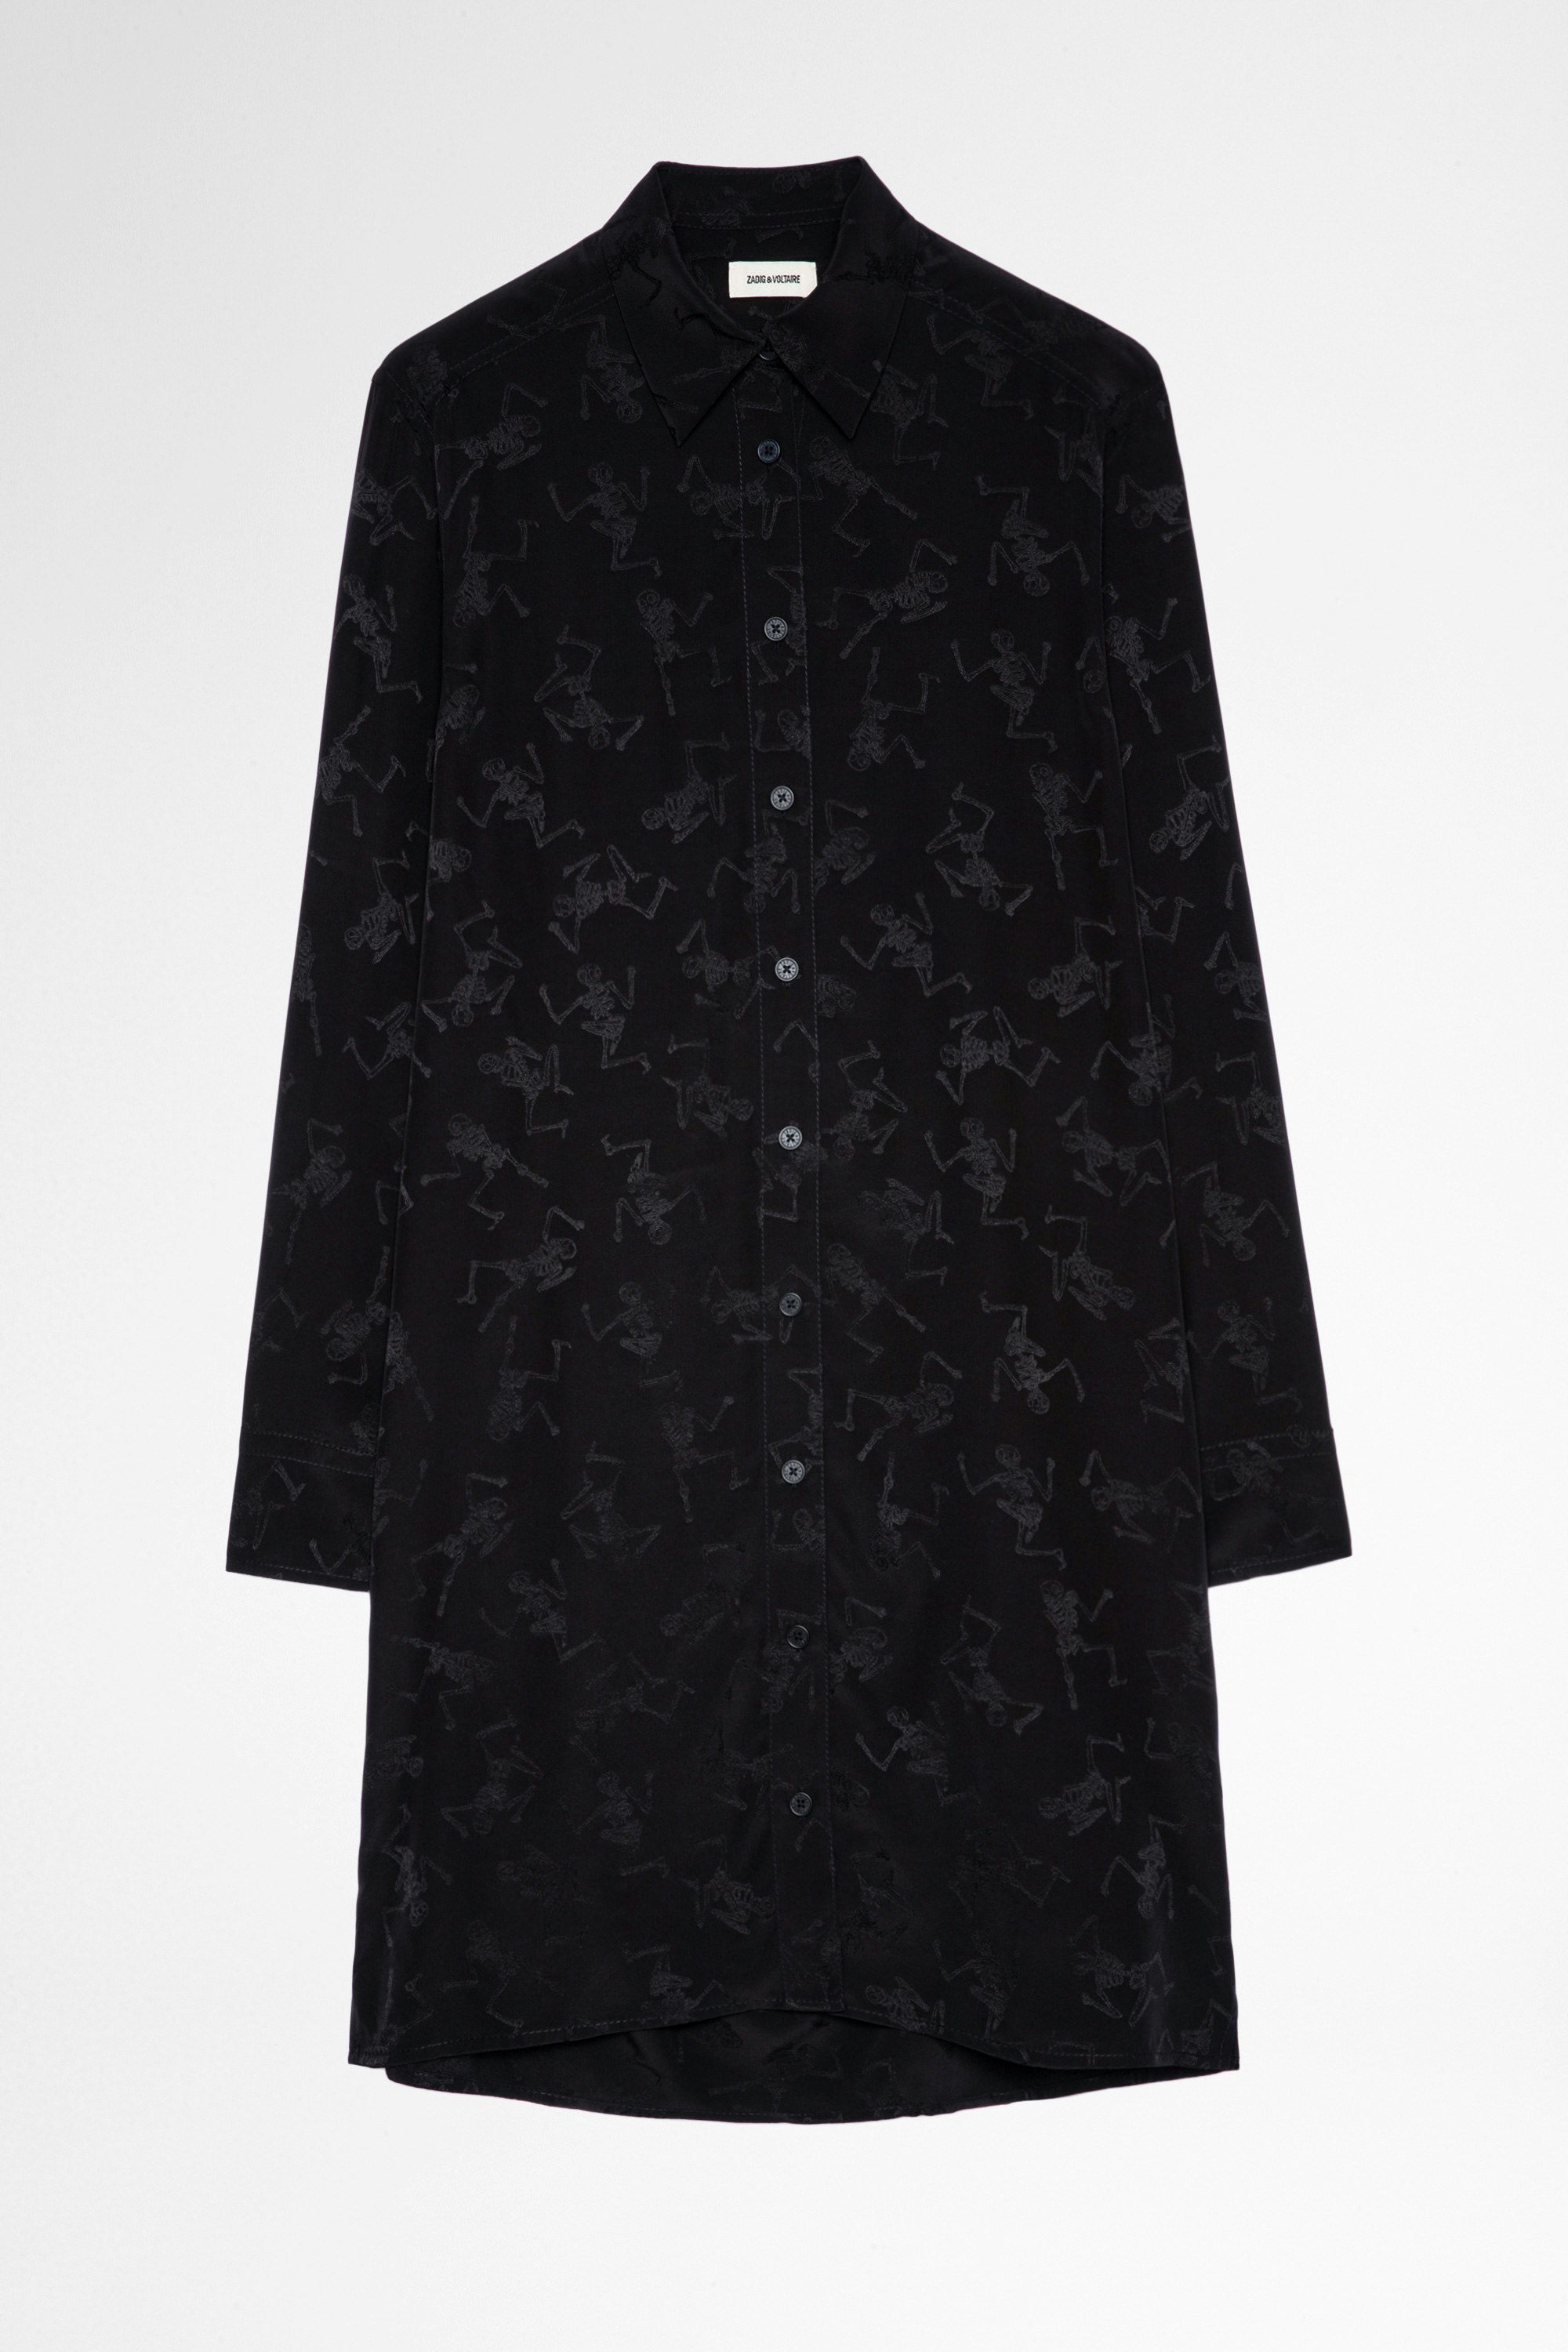 Rais シルクドレス Women's black shirt dress with jacquard skeleton